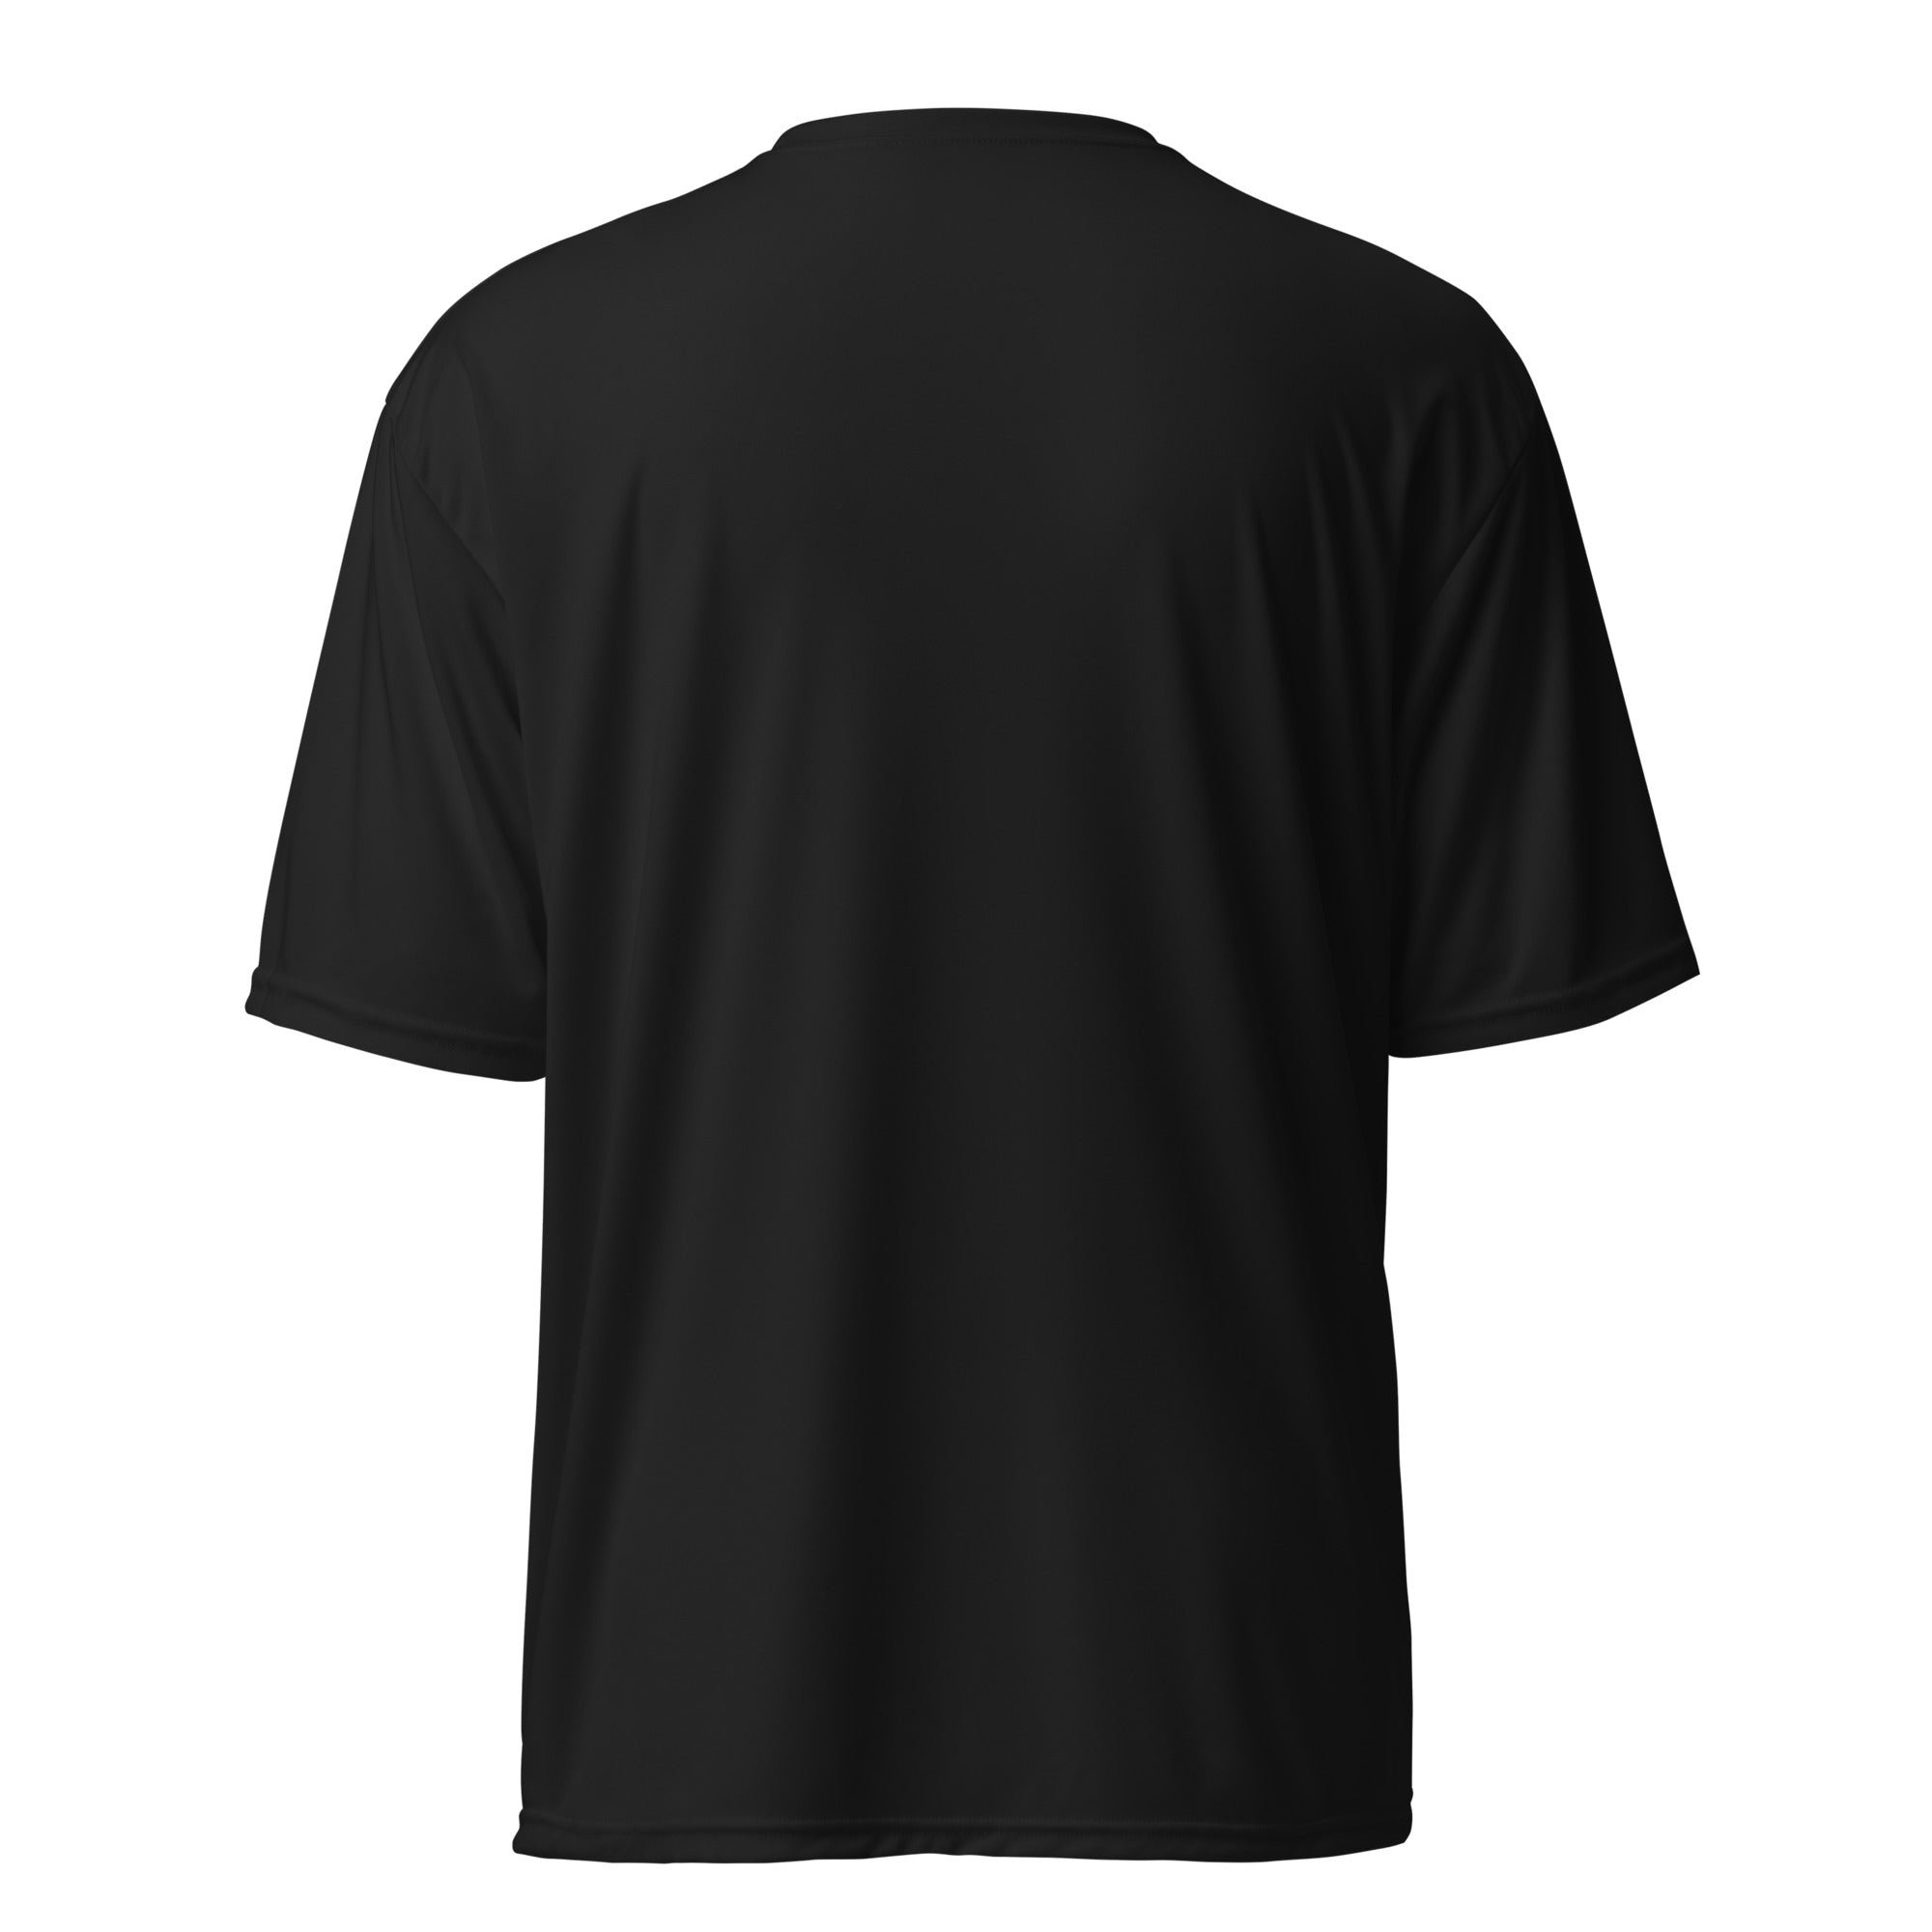 USF Unisex performance crew neck t-shirt